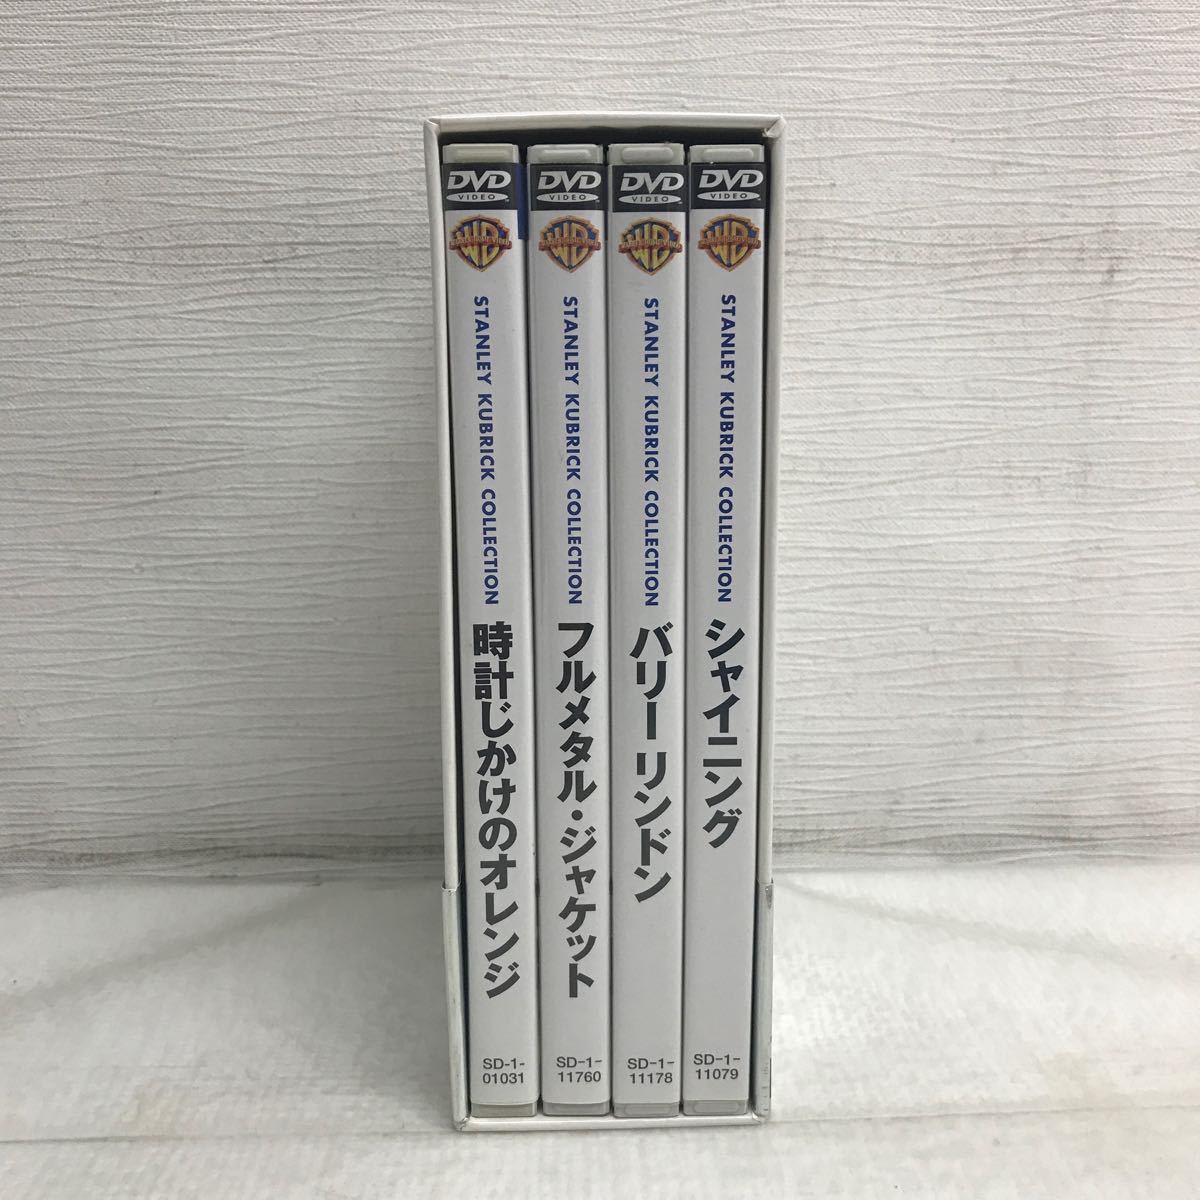 PY1214B スタンリー・キューブリック DVD スペシャル BOX ボックス 限定生産 4枚組 帯付 日本語字幕 時計じかけのオレンジ/シャイニング/他_画像4